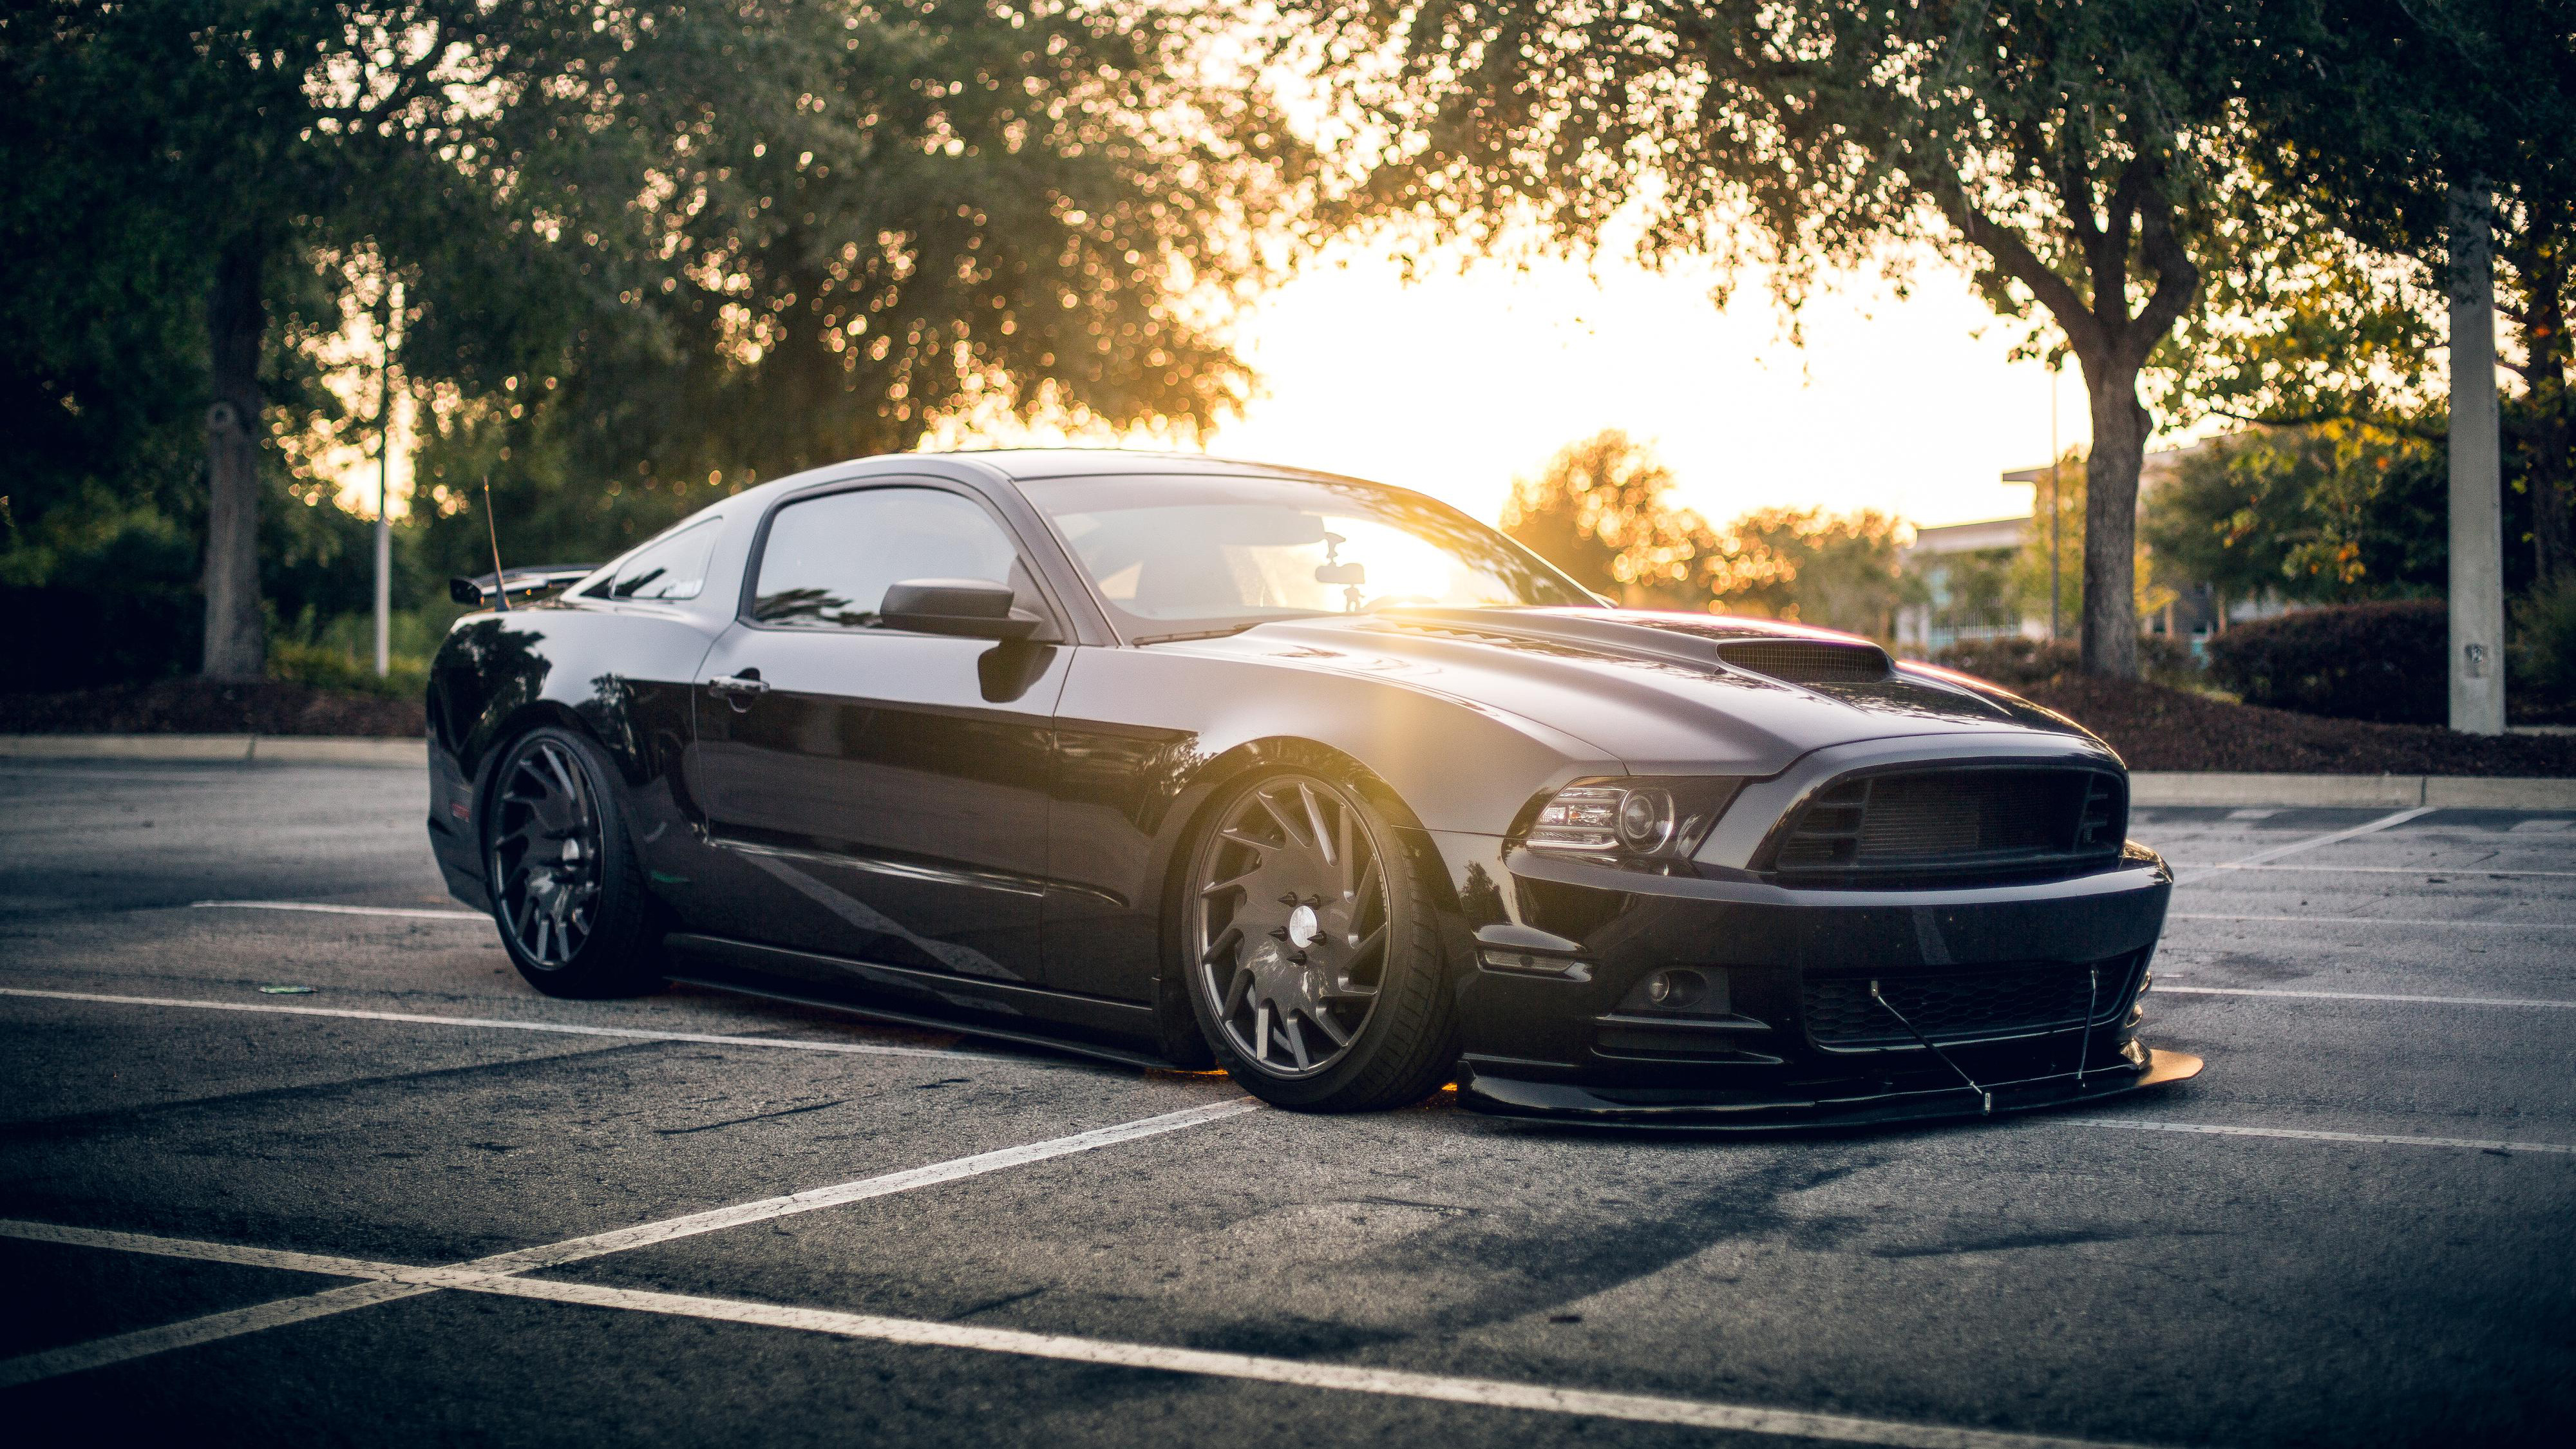 Black Mustang Wallpaper